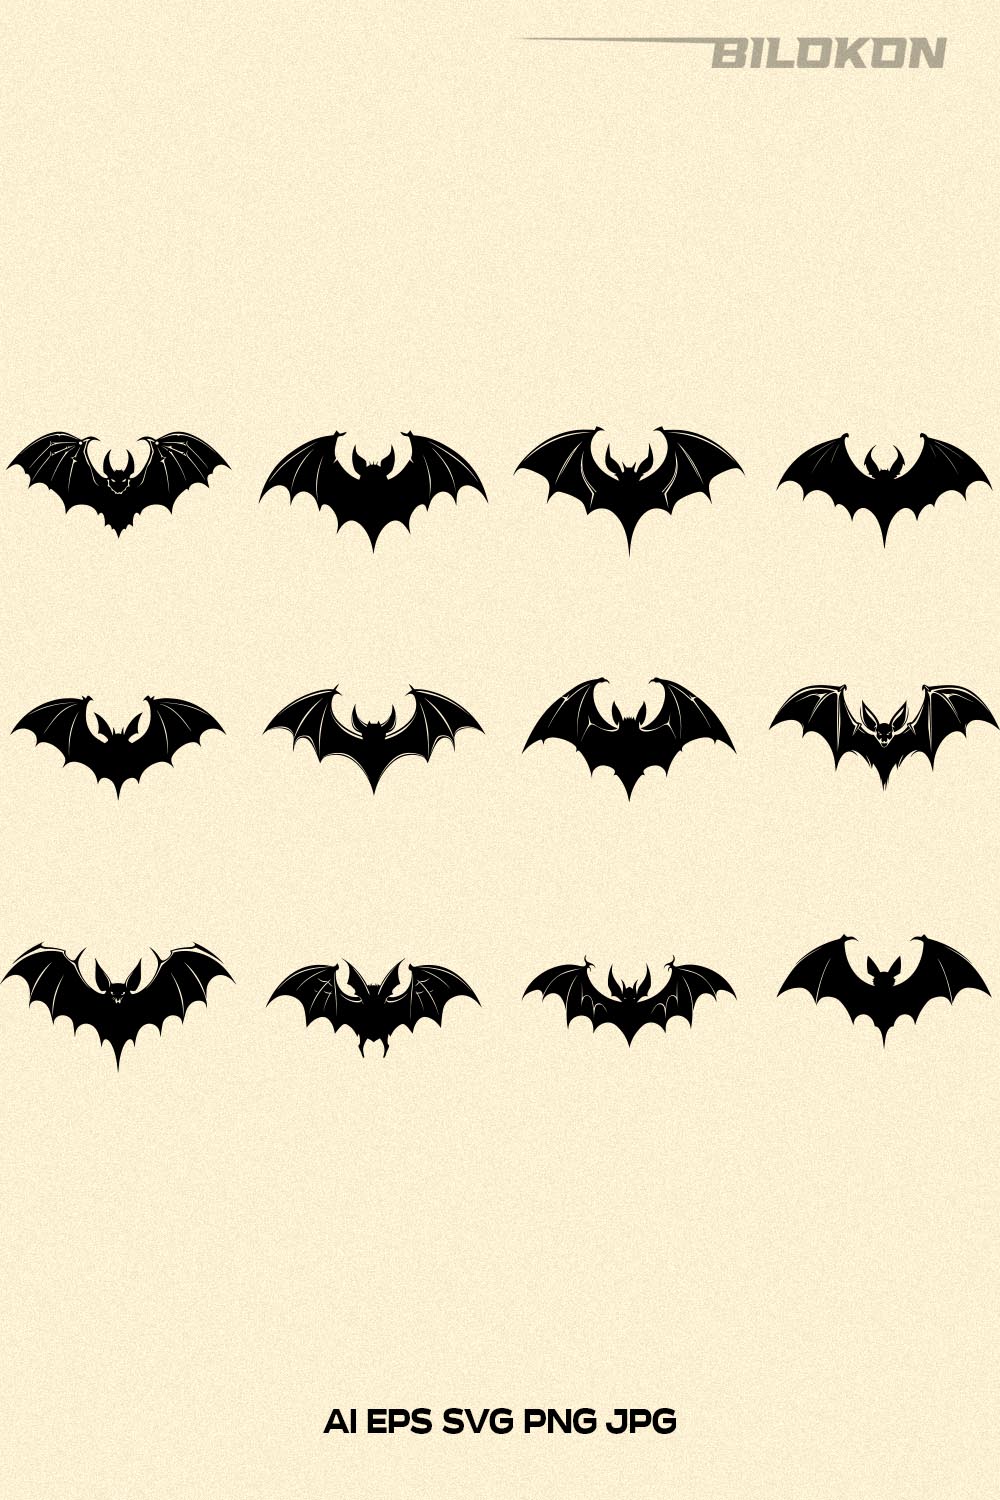 Black Bat Silhouettes set, Halloween bat, Vector, SVG pinterest preview image.